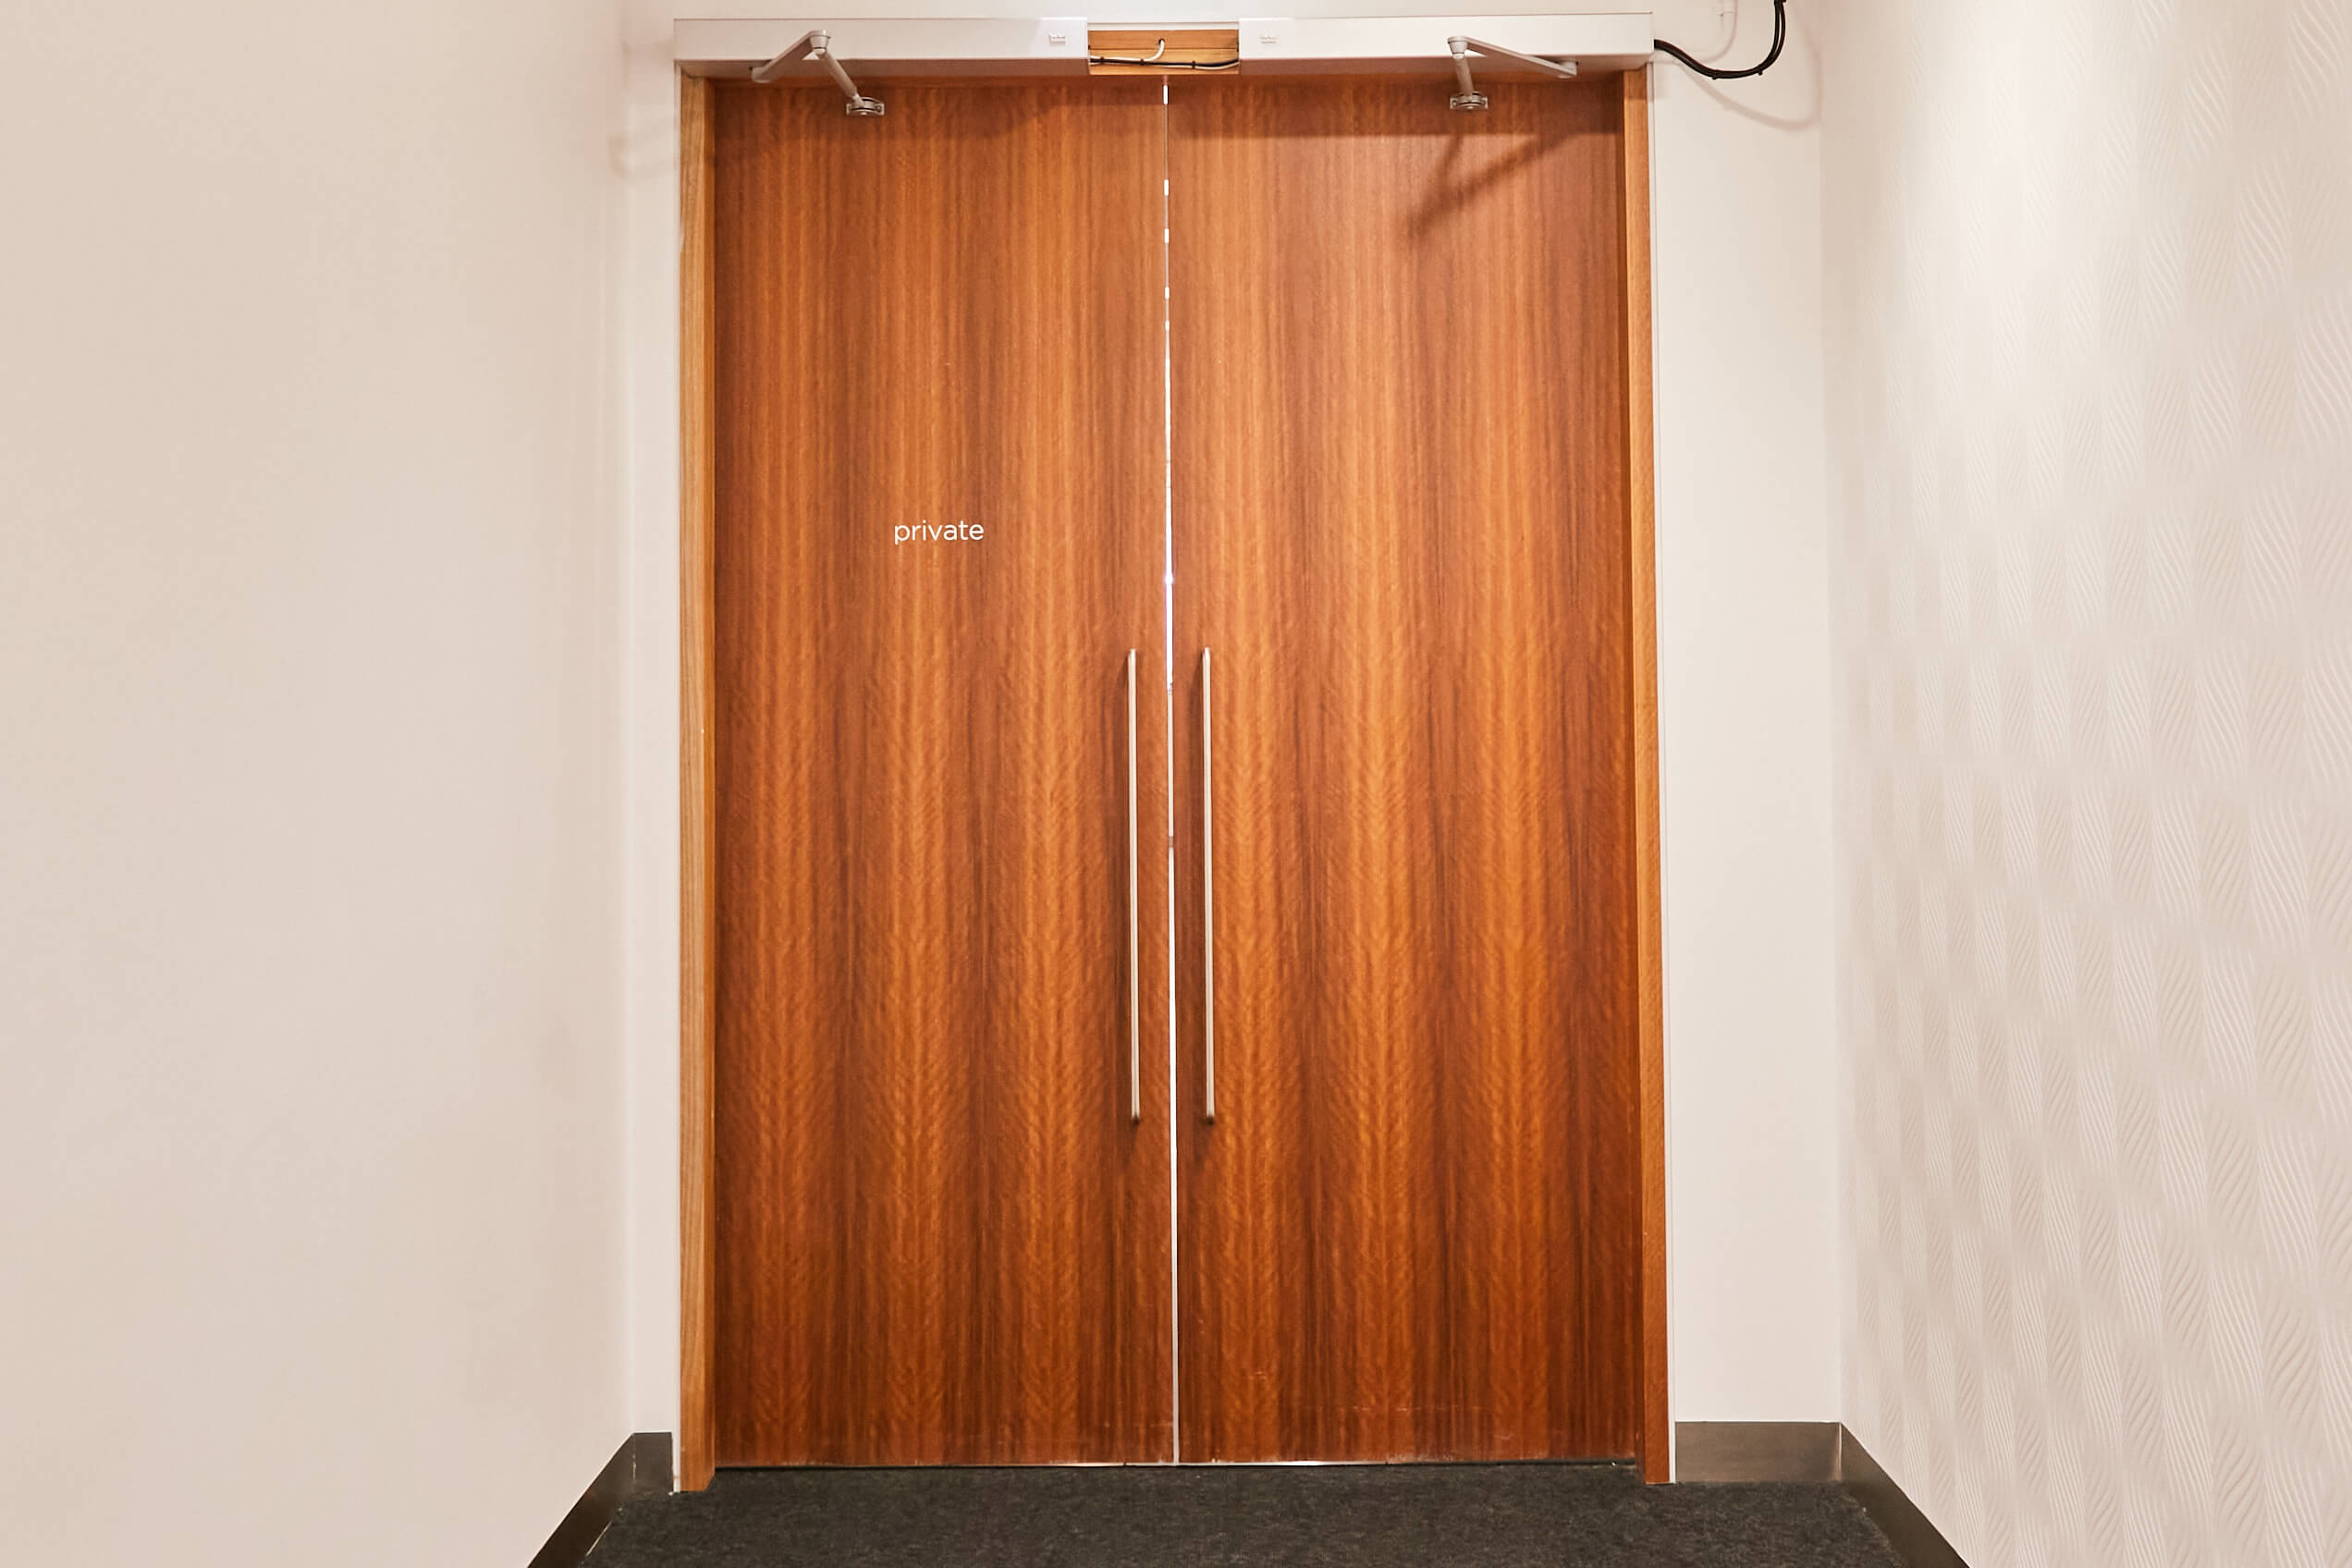 is this a door to a secret Virgin Australia lounge?